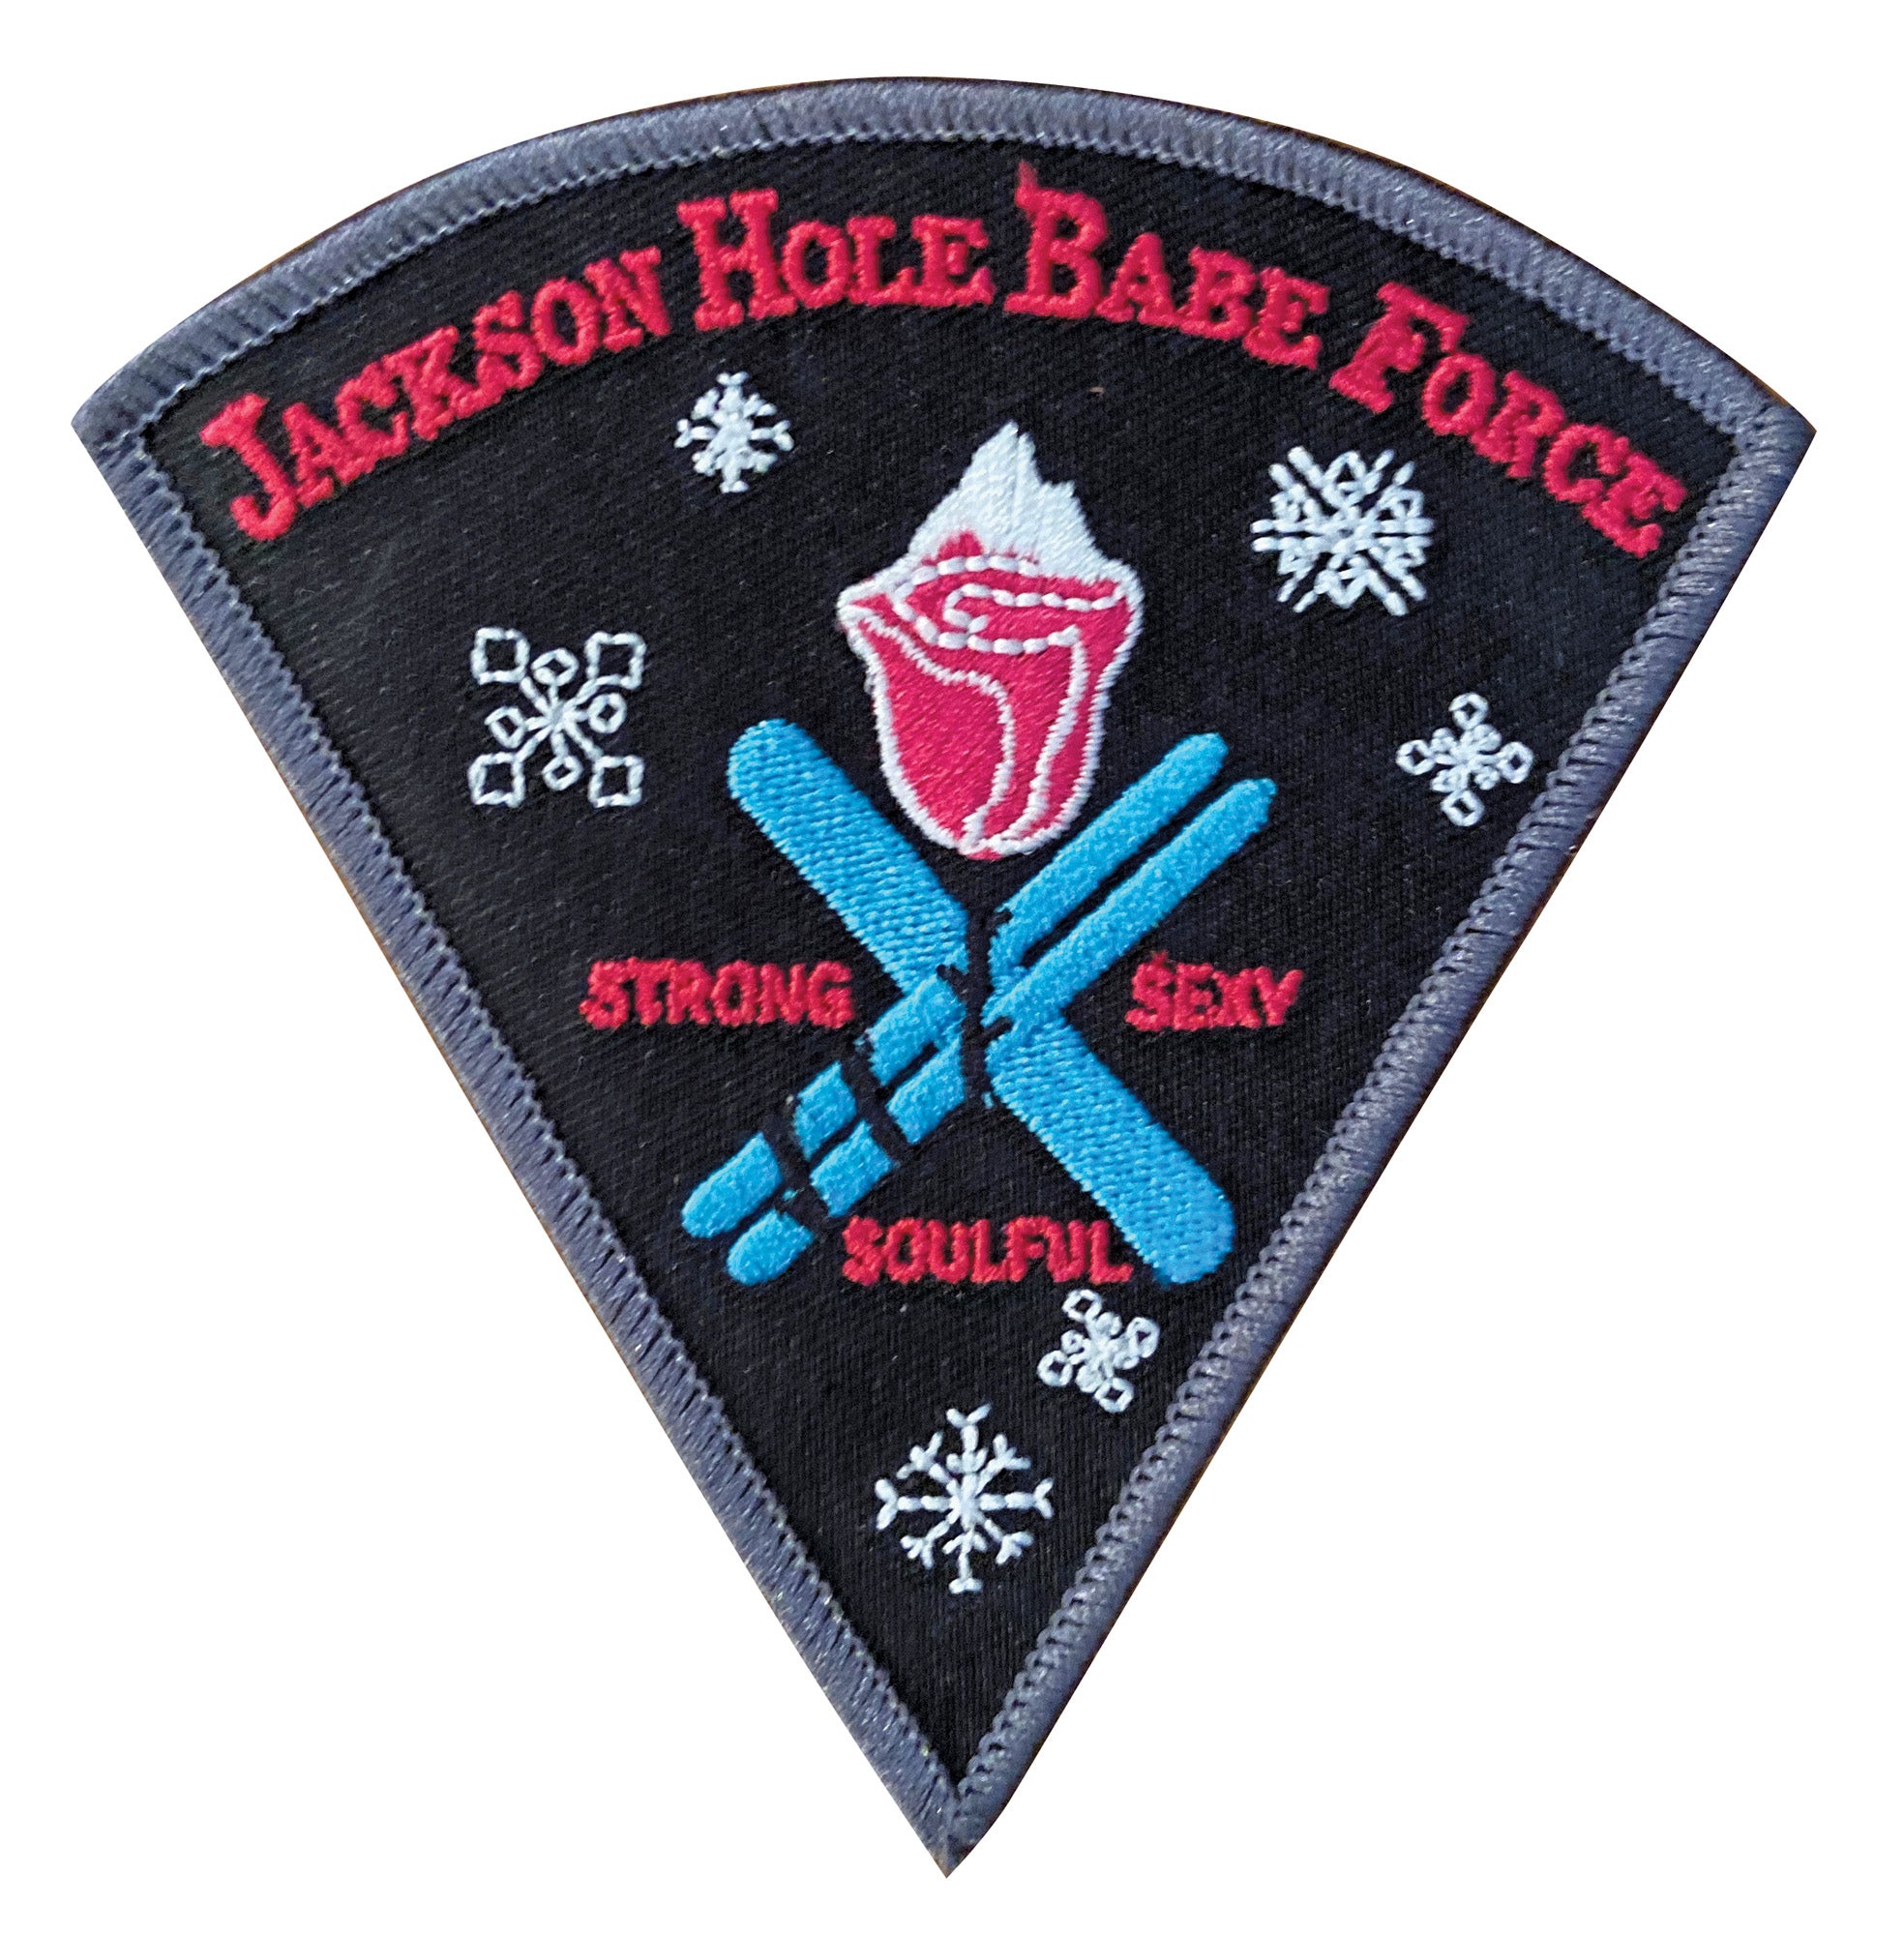 Jackson Hole Babe Force Patch